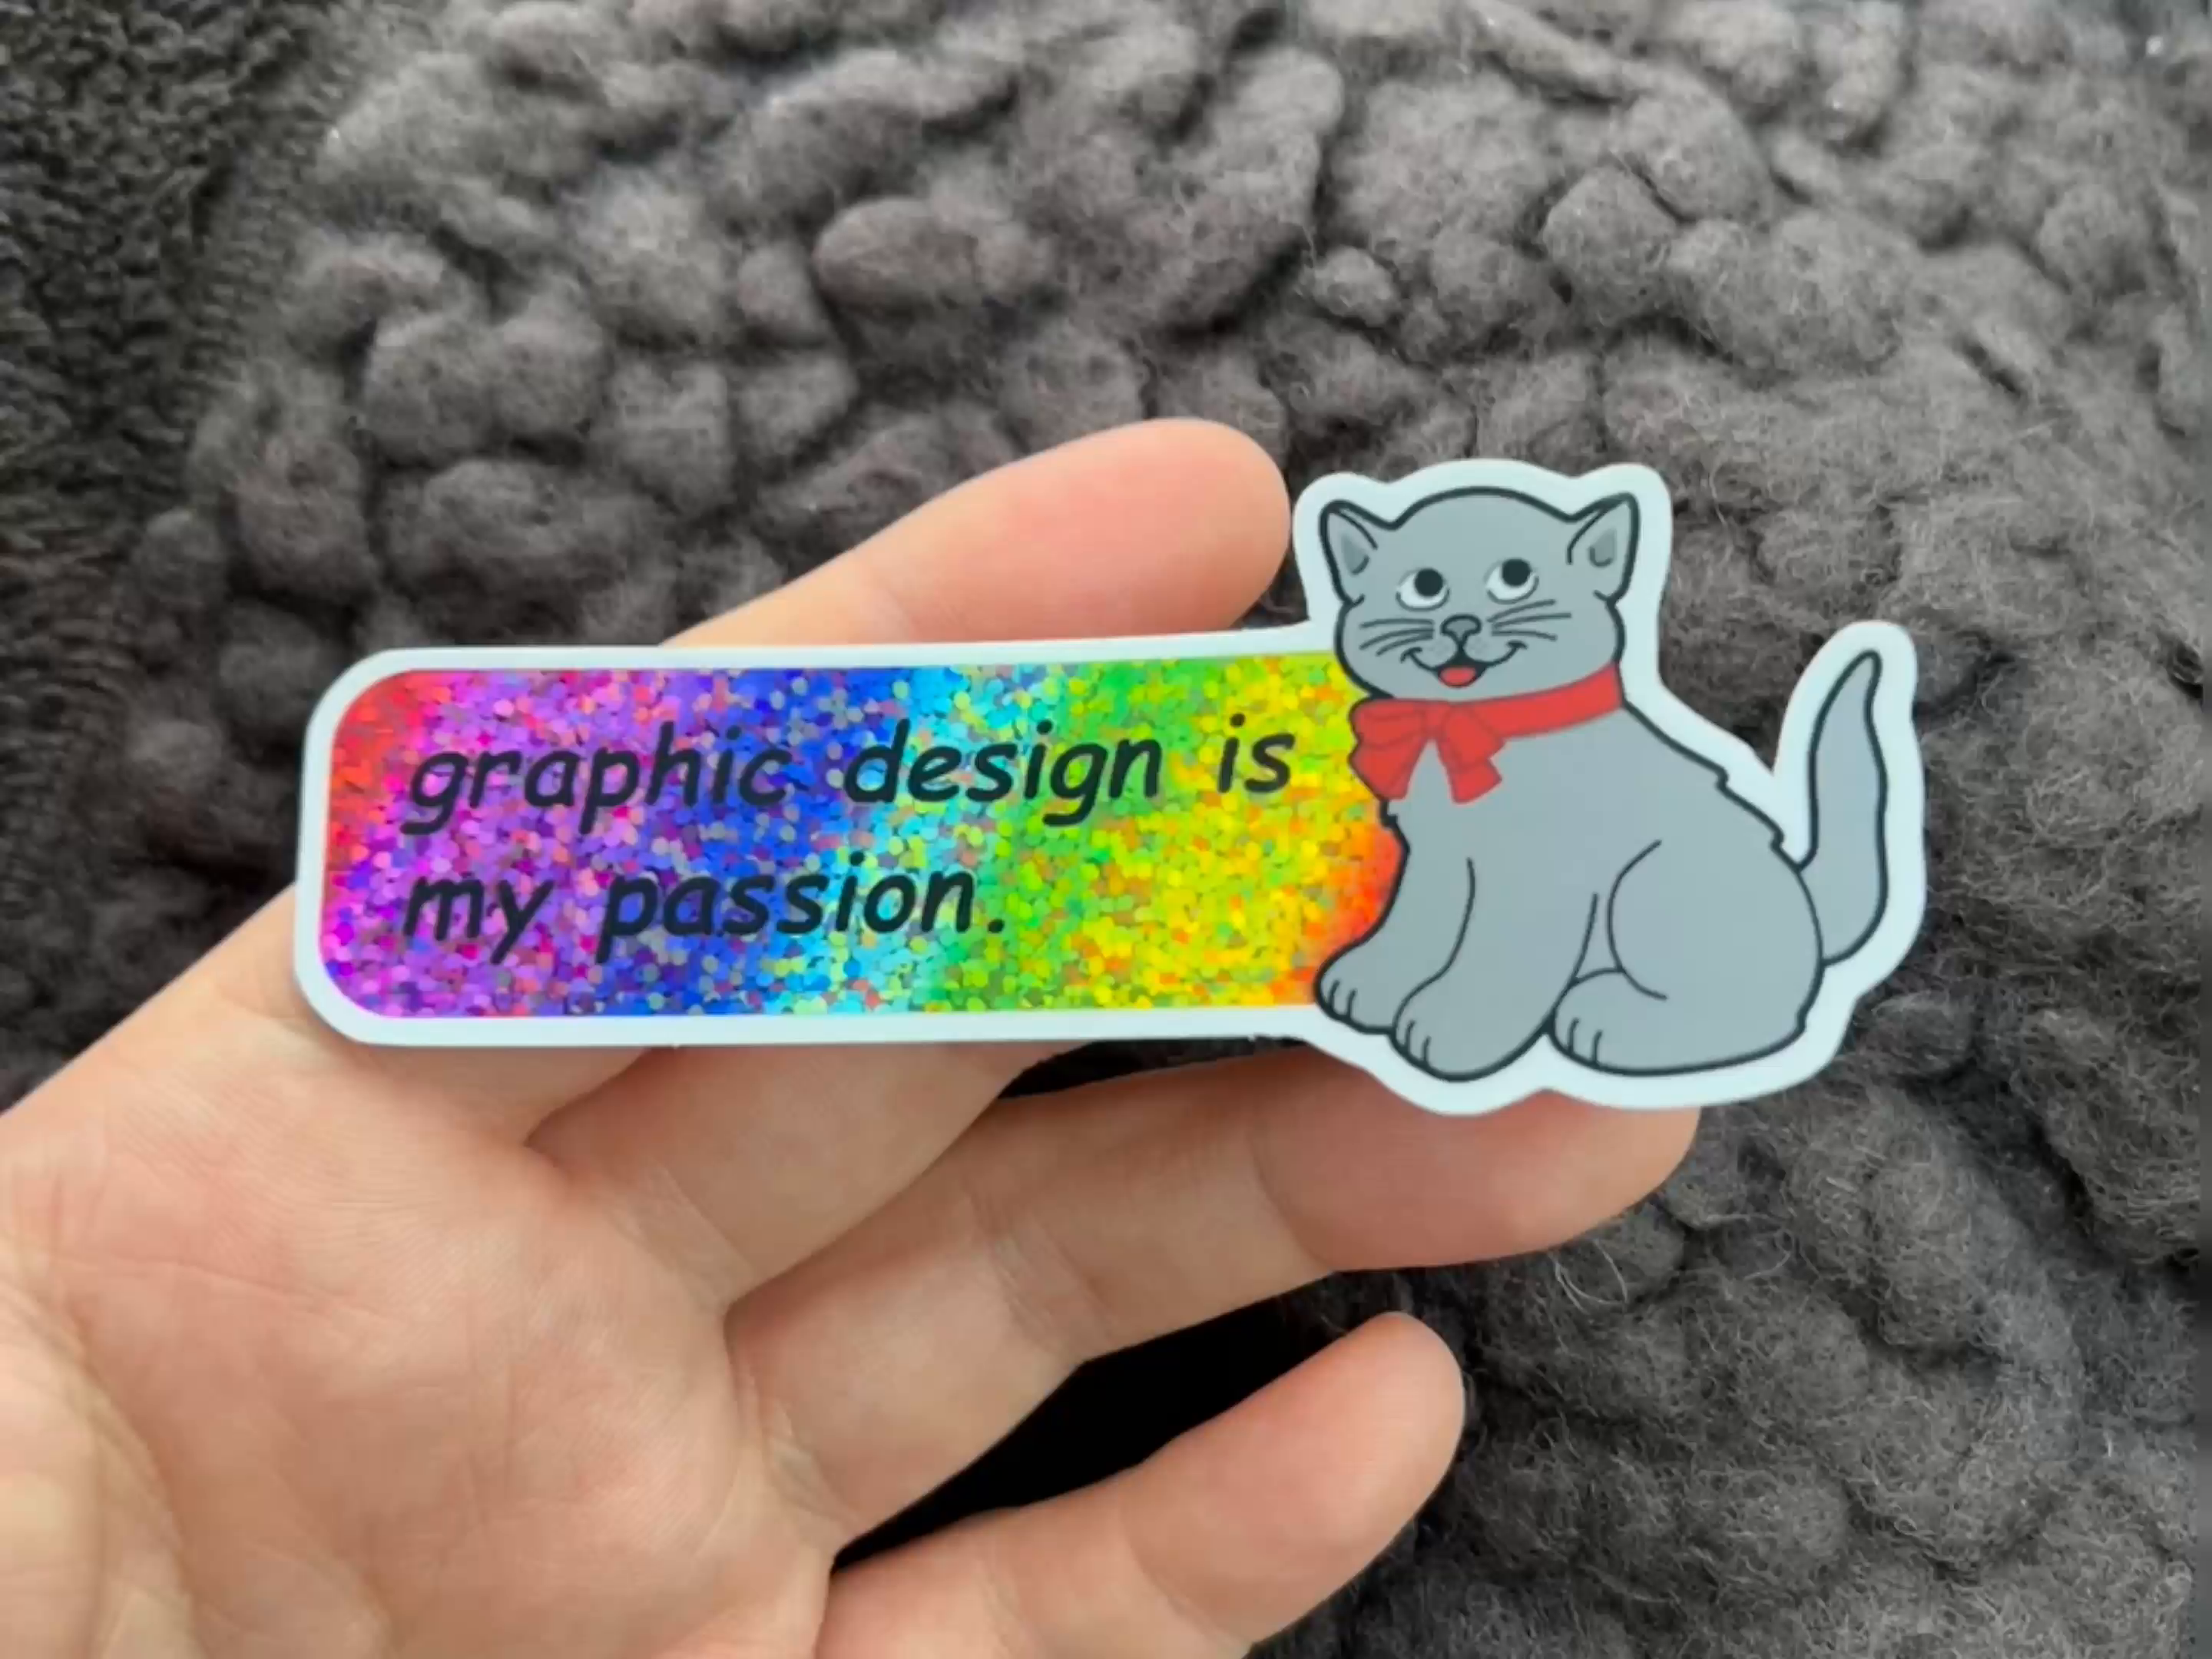 Graphic design is my passion Sticker